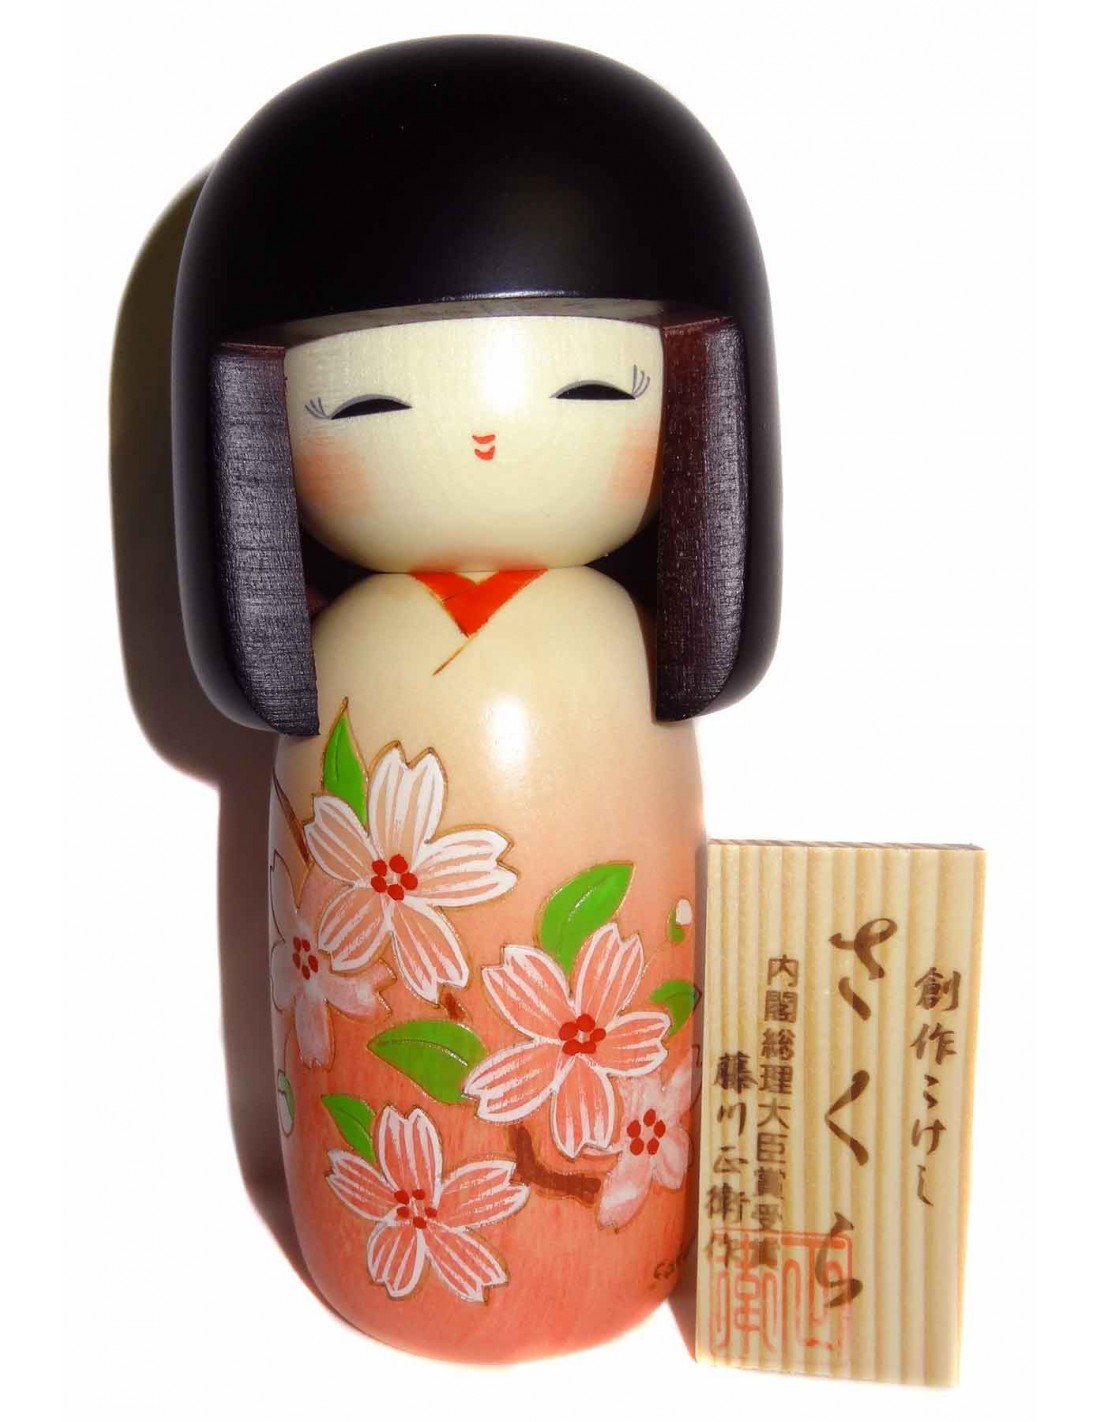 Art Dolls Art And Collectibles Creative Kokeshi Doll By Waichi Sakura Dolls And Miniatures Pe